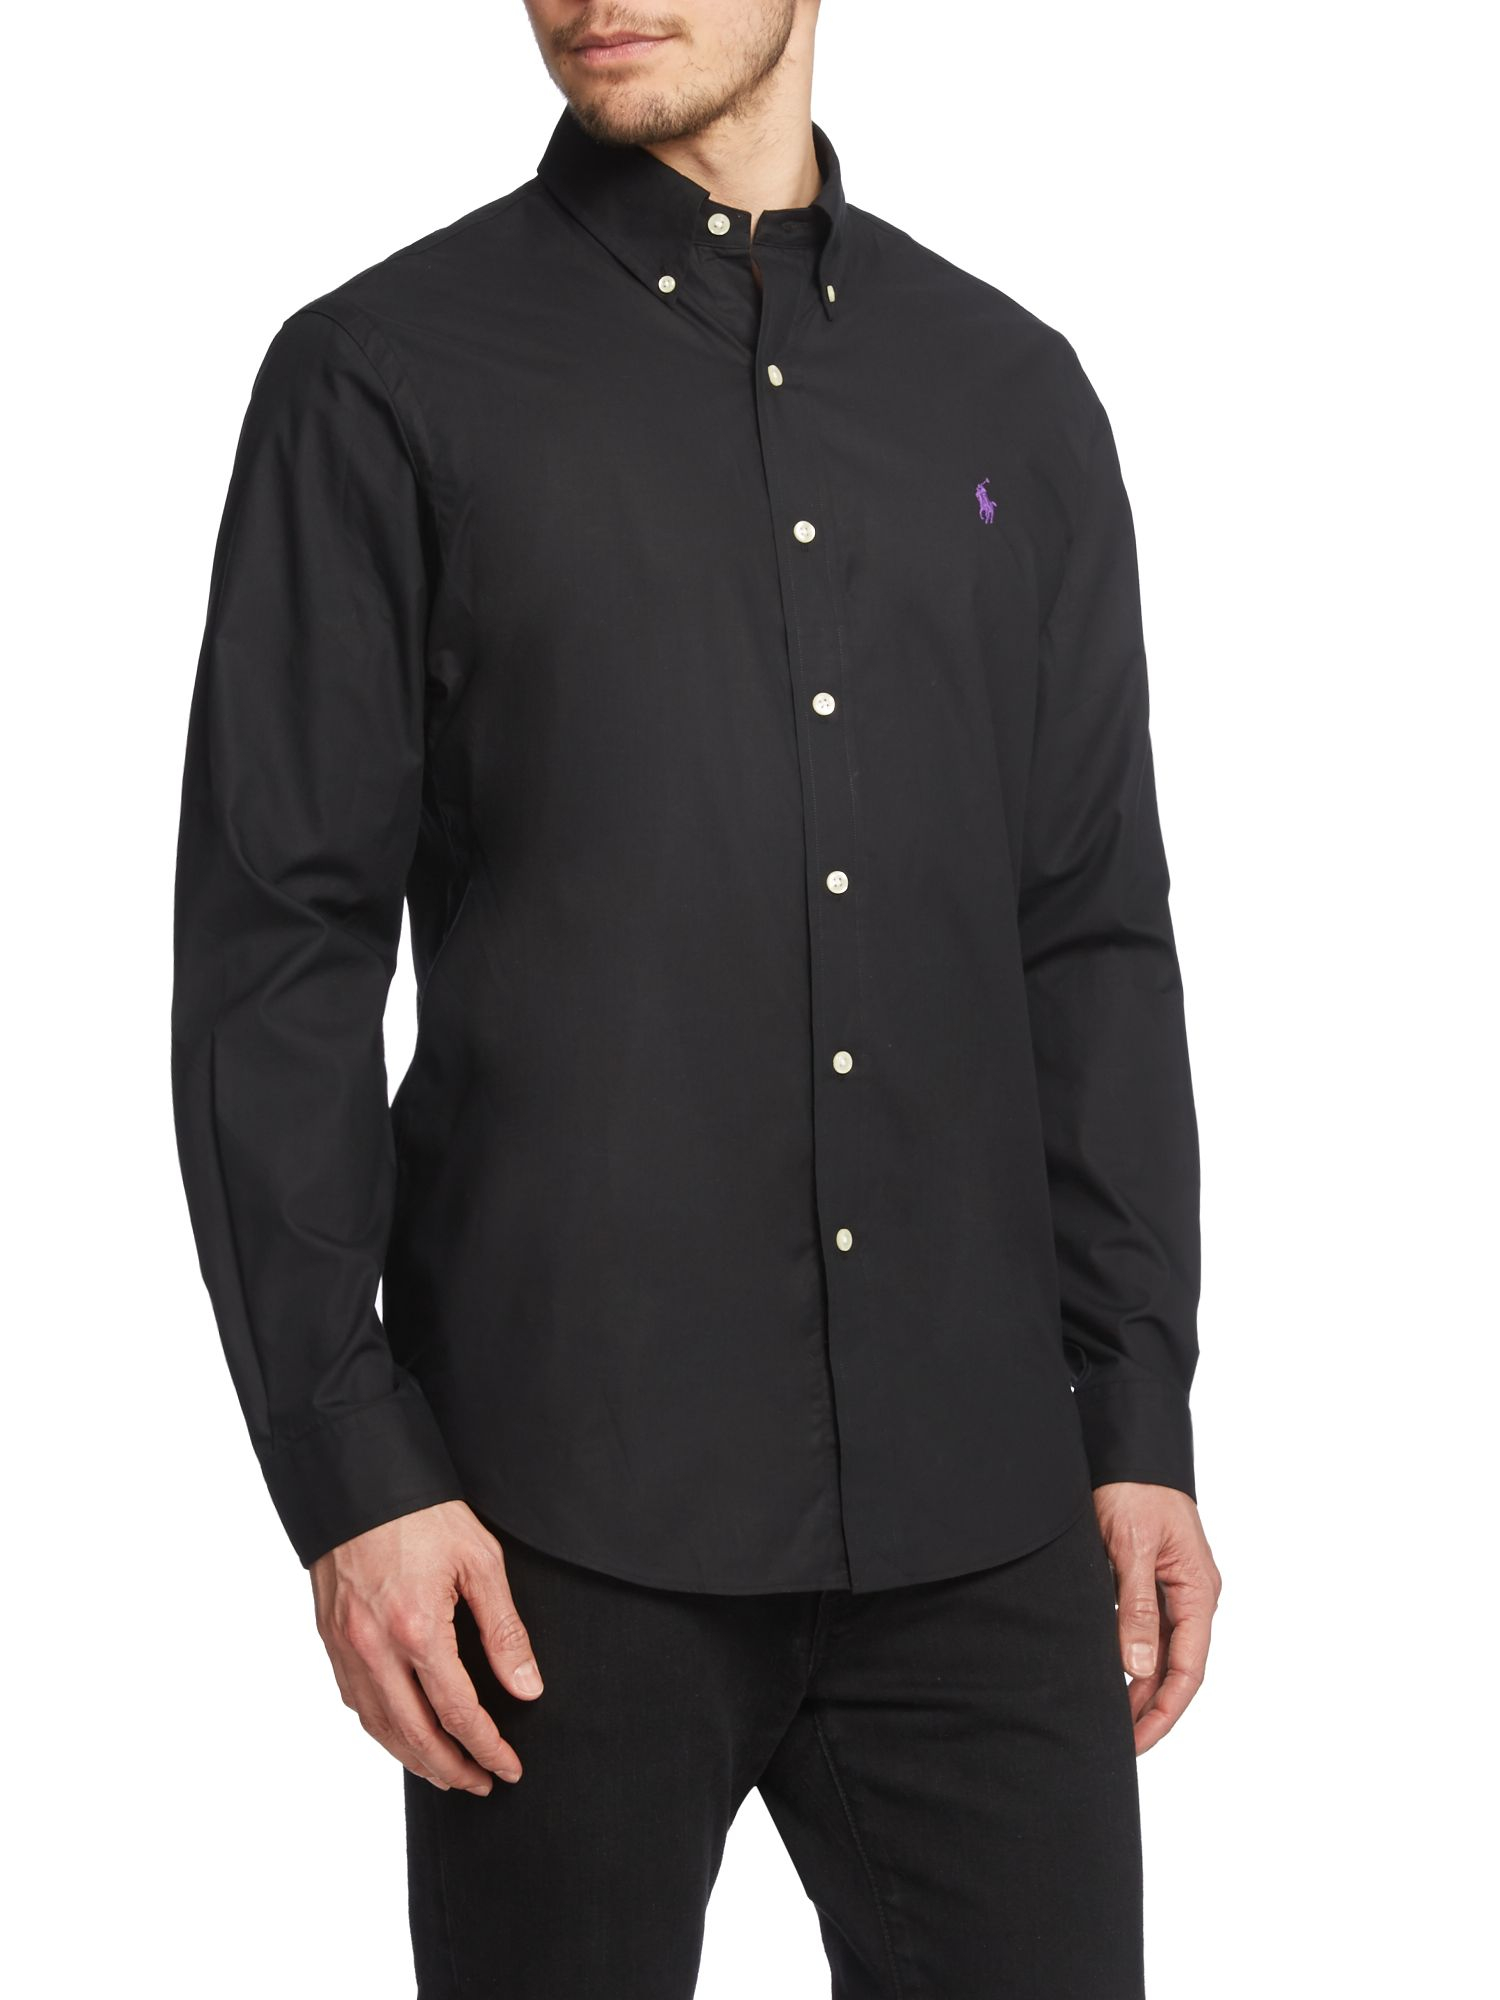 Polo ralph lauren Plain Long Sleeve Button Down Shirt in Black for Men